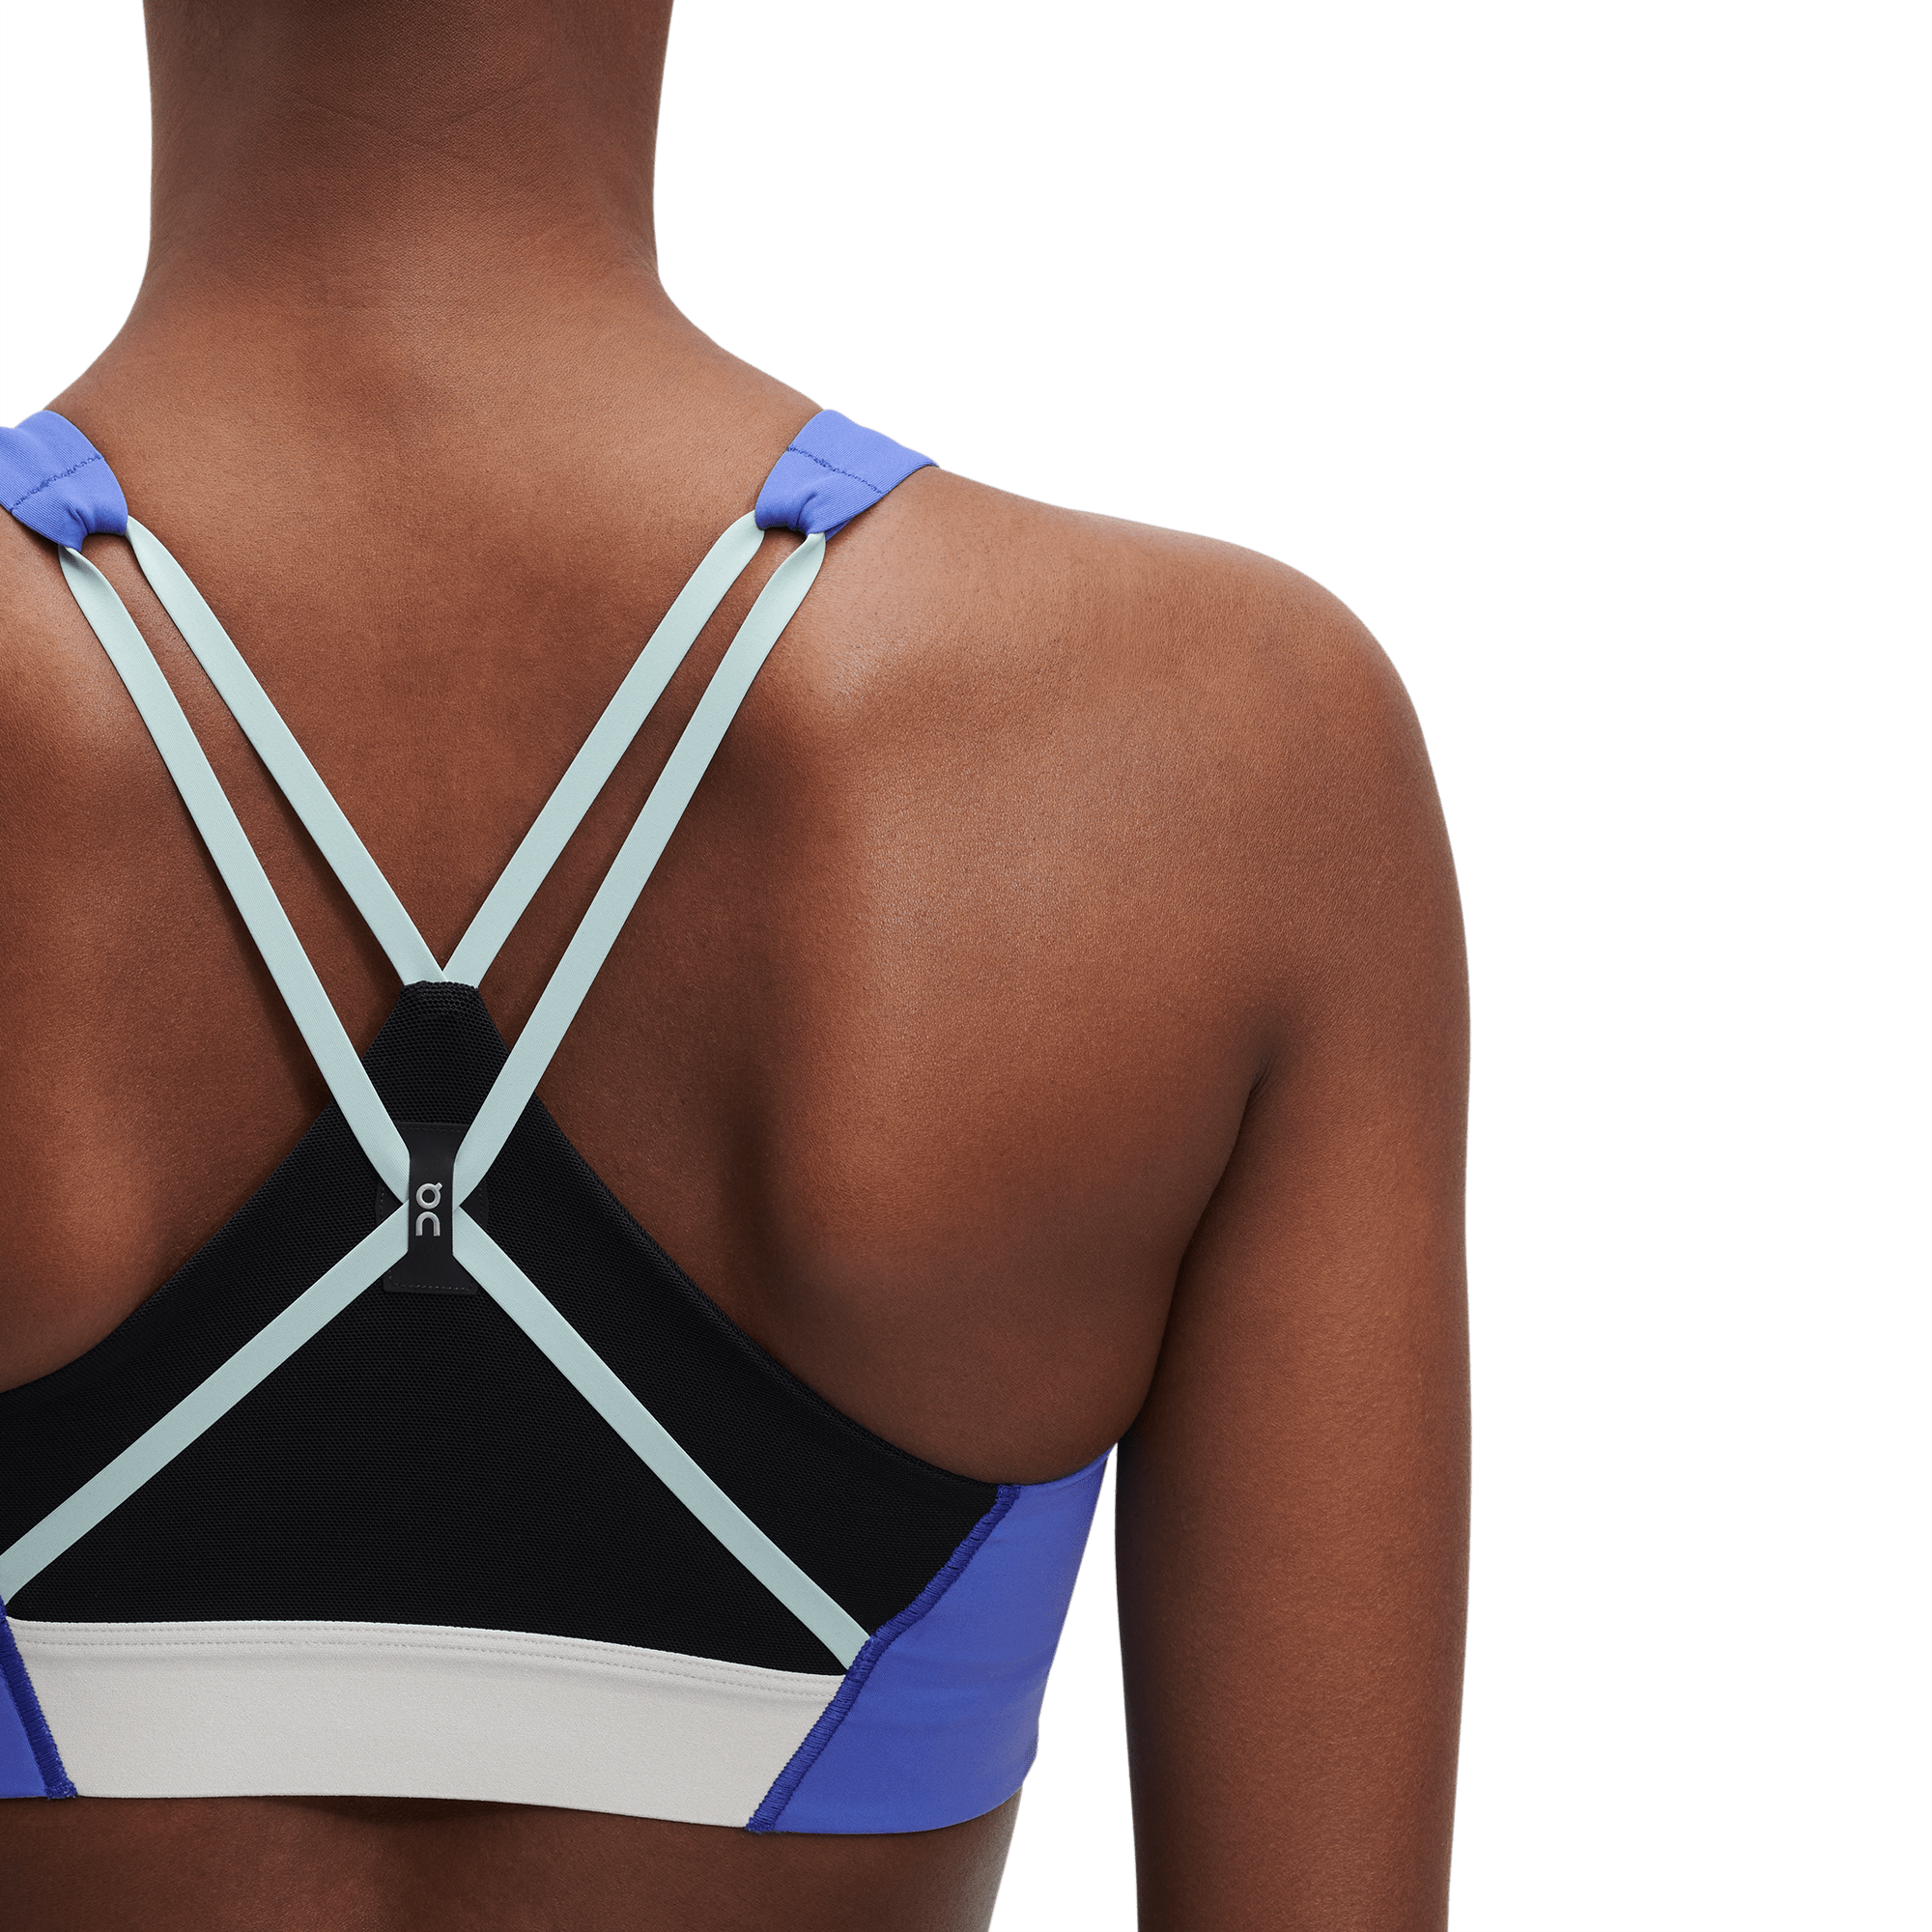 Women's Training Asymmetric Bra in Black/mazarine Blue